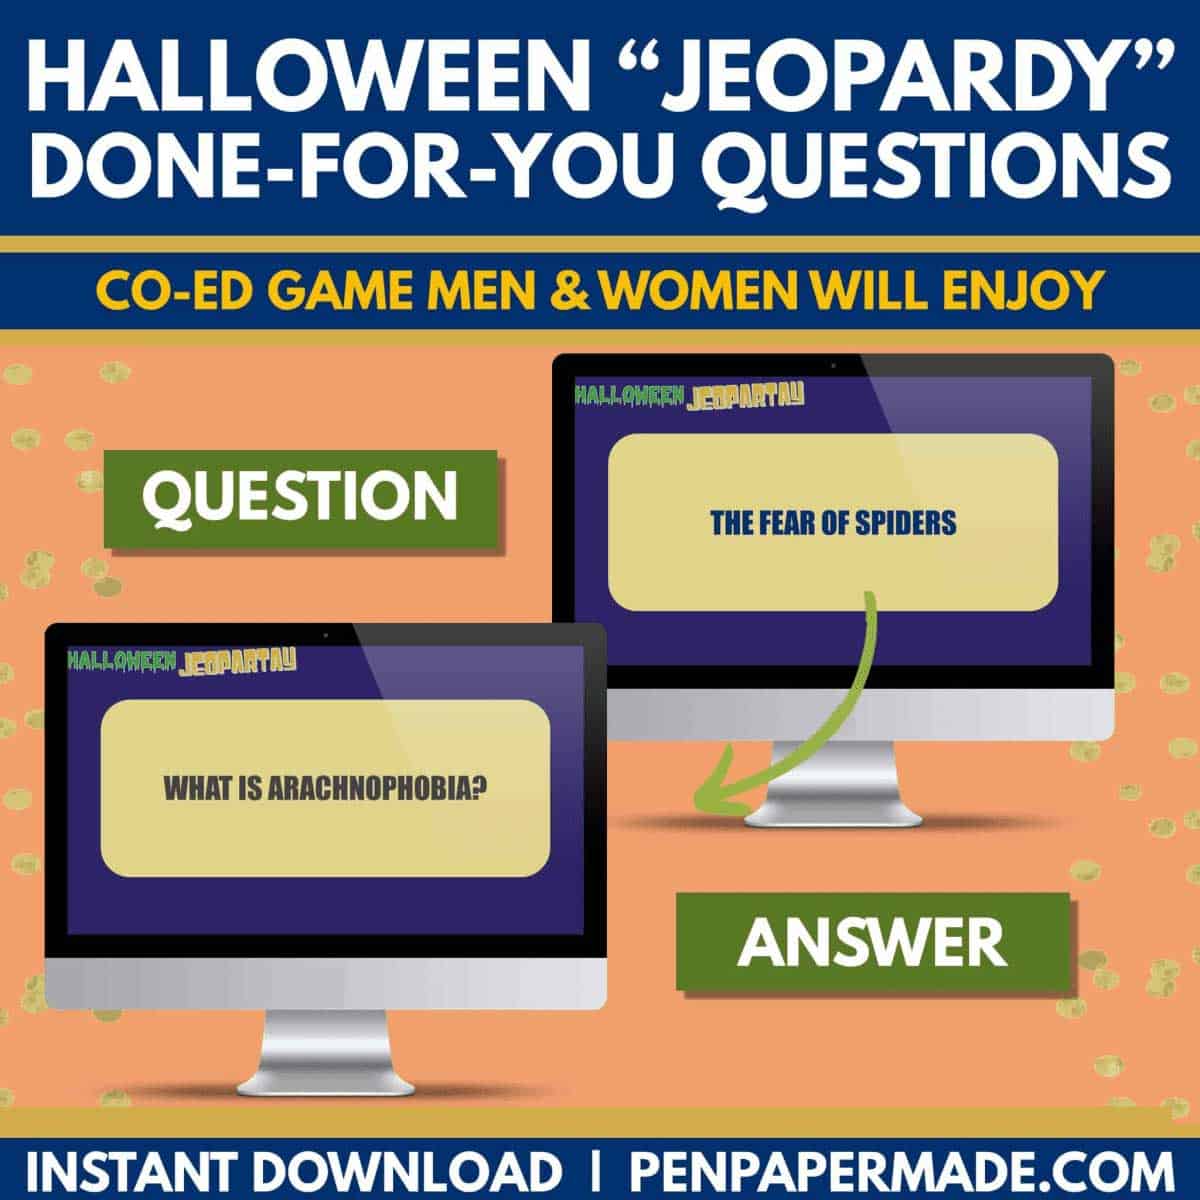 fun halloween jeopardy questions like what is arachnophobia?